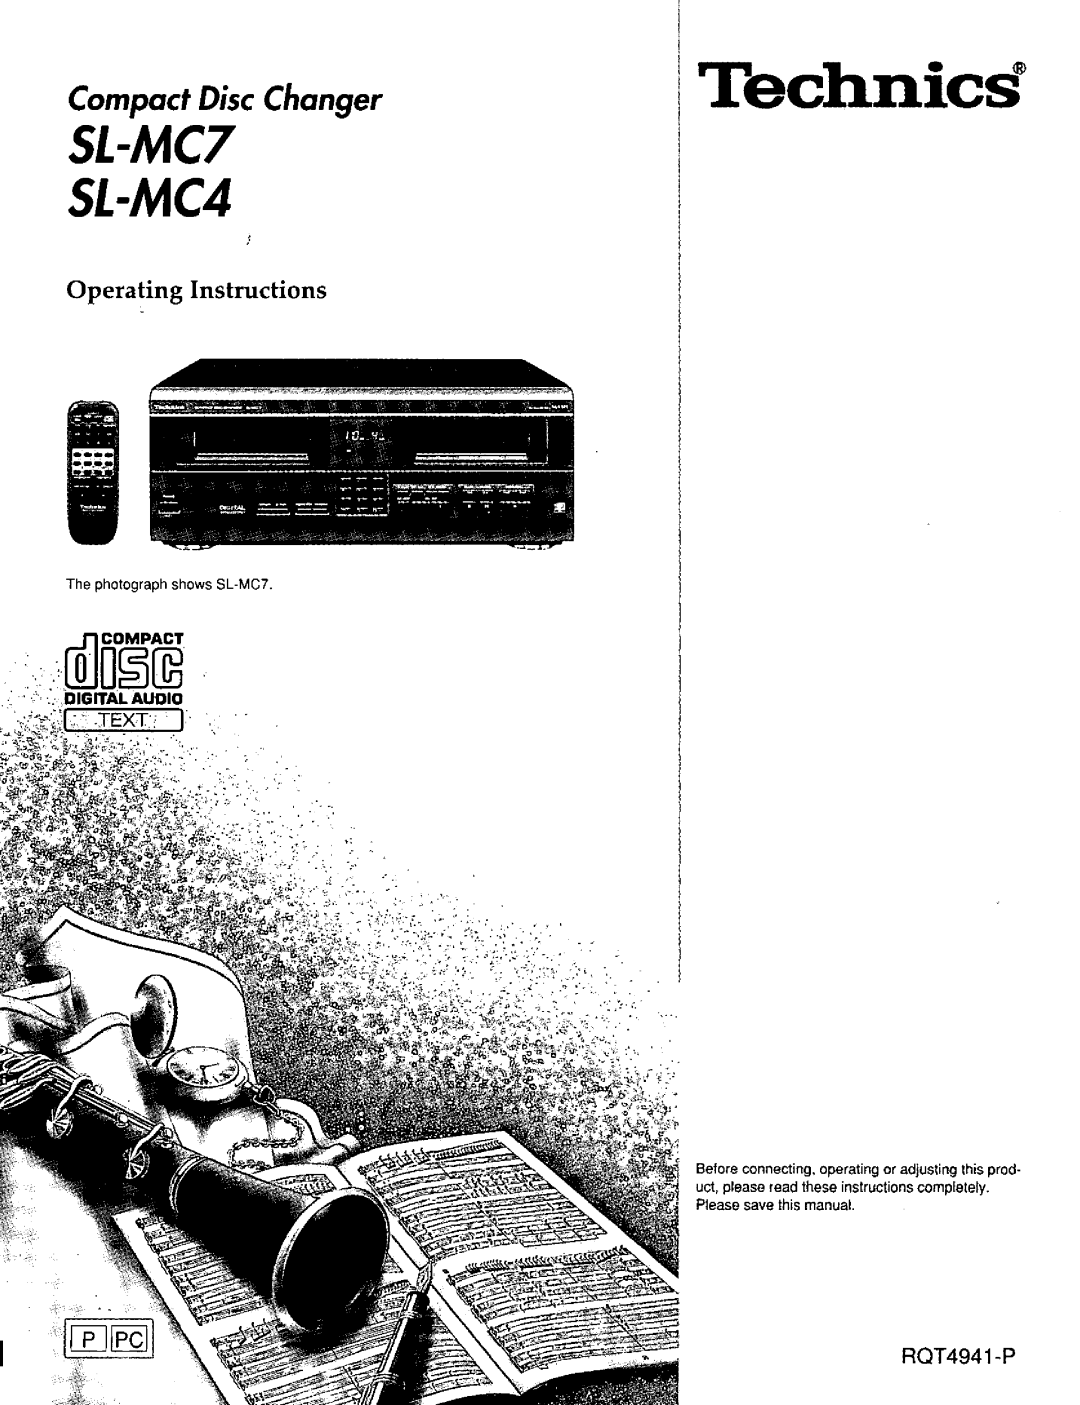 Technics SL-MC4, SL-MC7 manual 